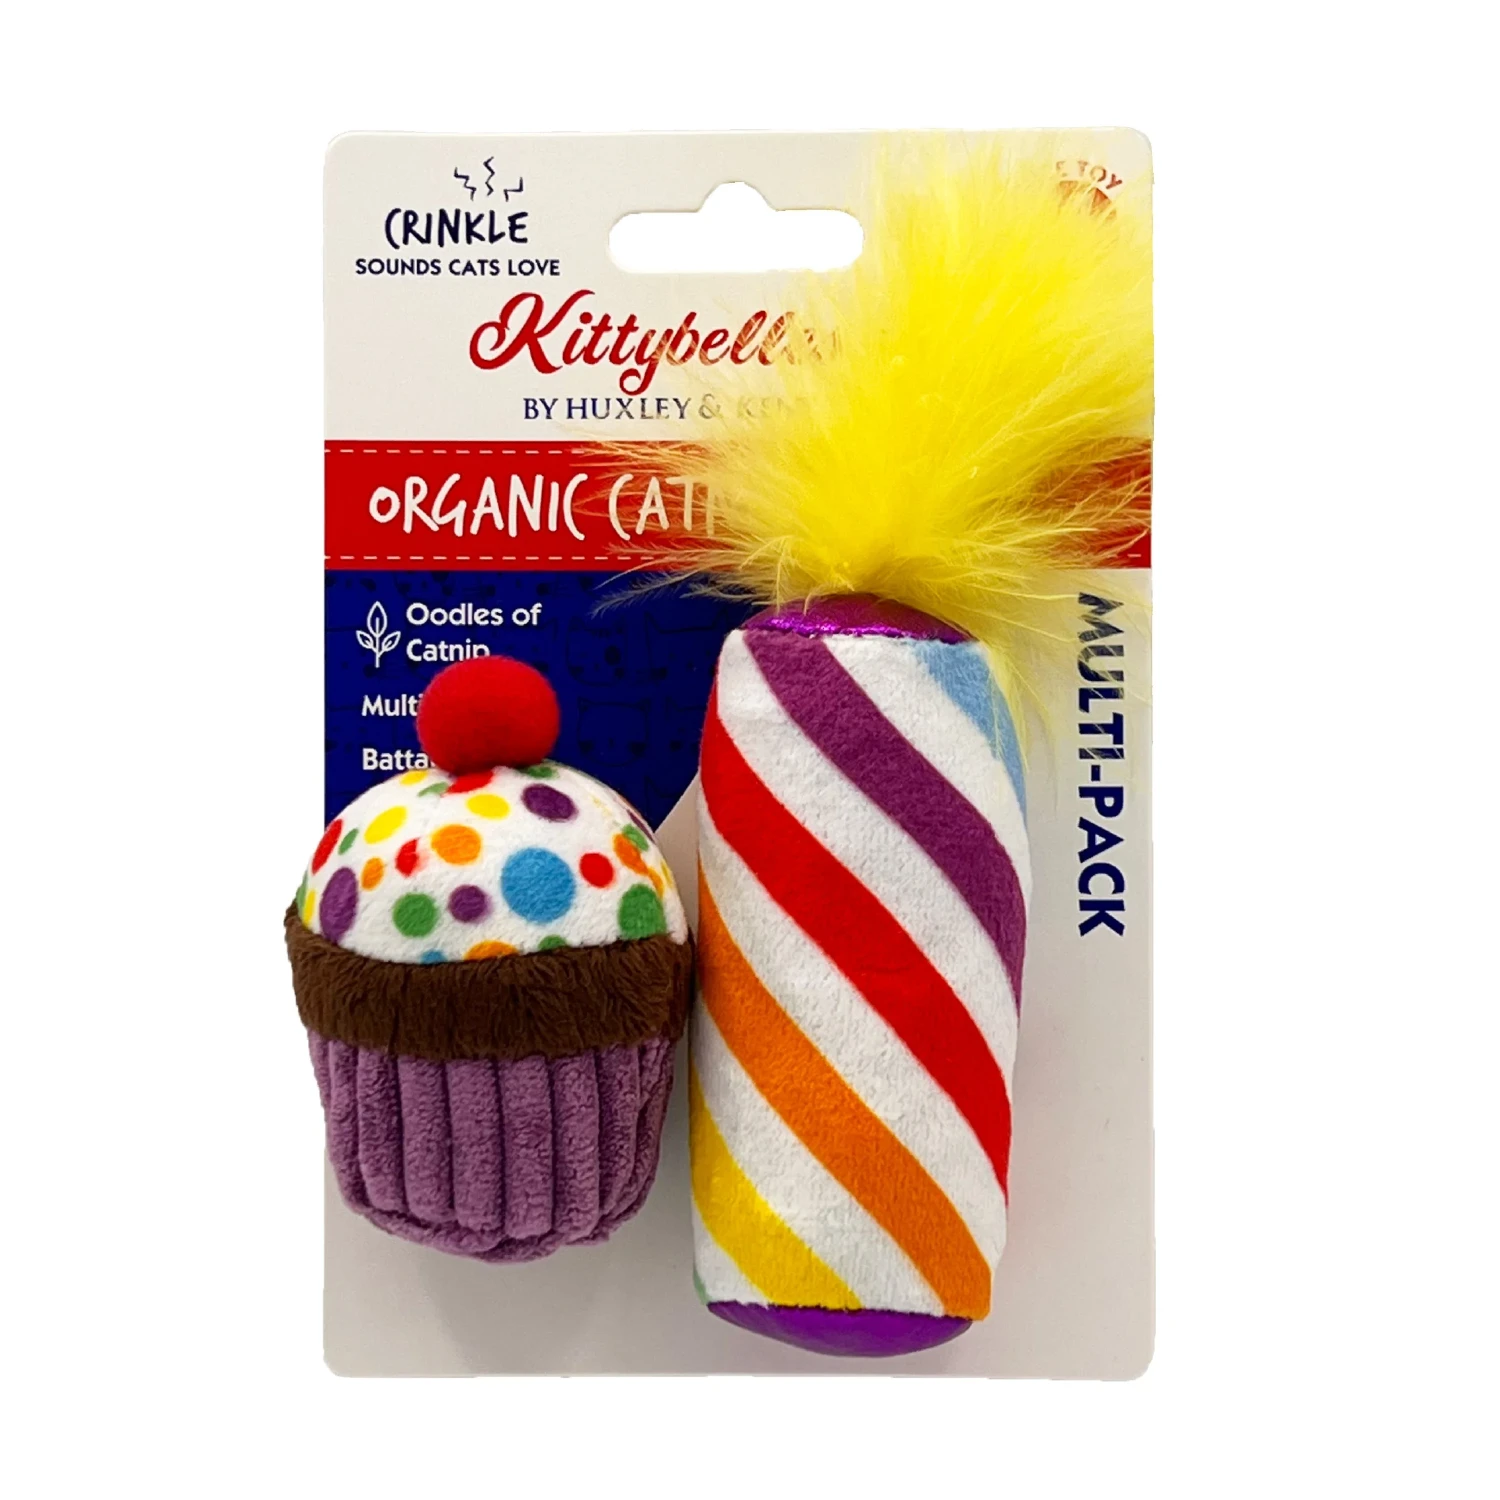 Kittybelles Celebration Bundle Plush Cat Toy - Me-Wow Cupcake & Candle